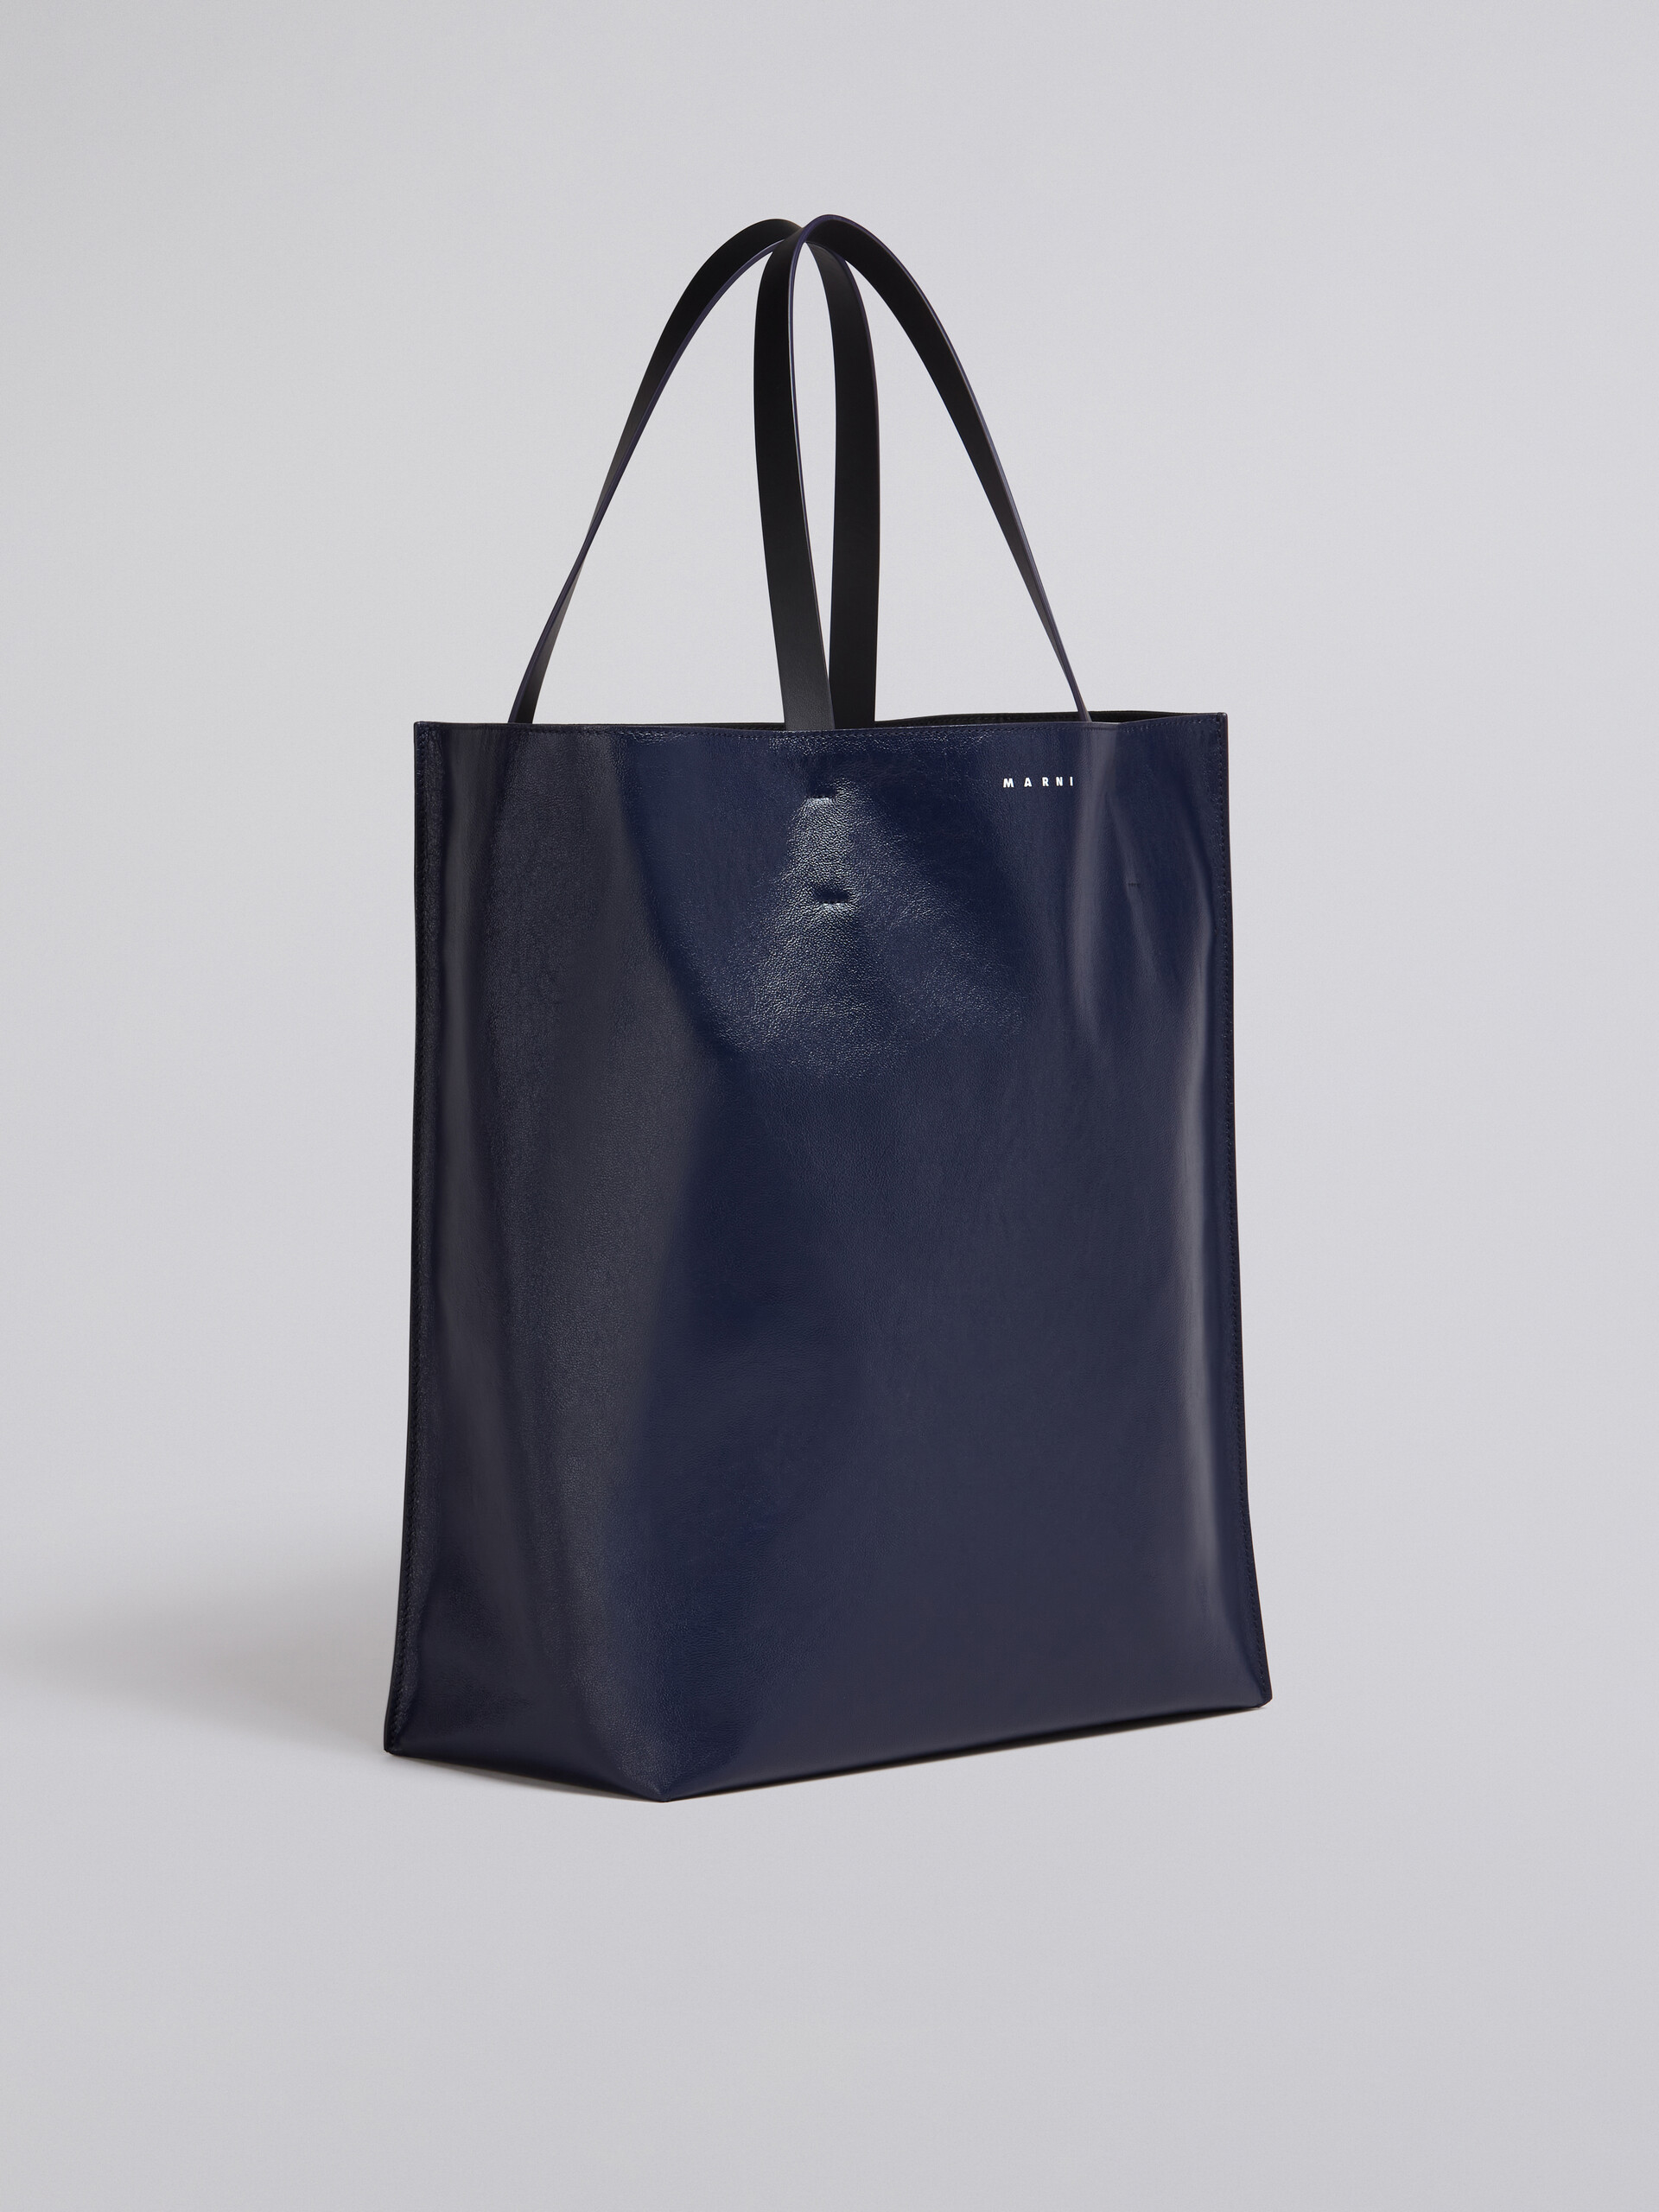 MUSEO SOFT bag grande in pelle lucida blu e nera - Borse shopping - Image 6